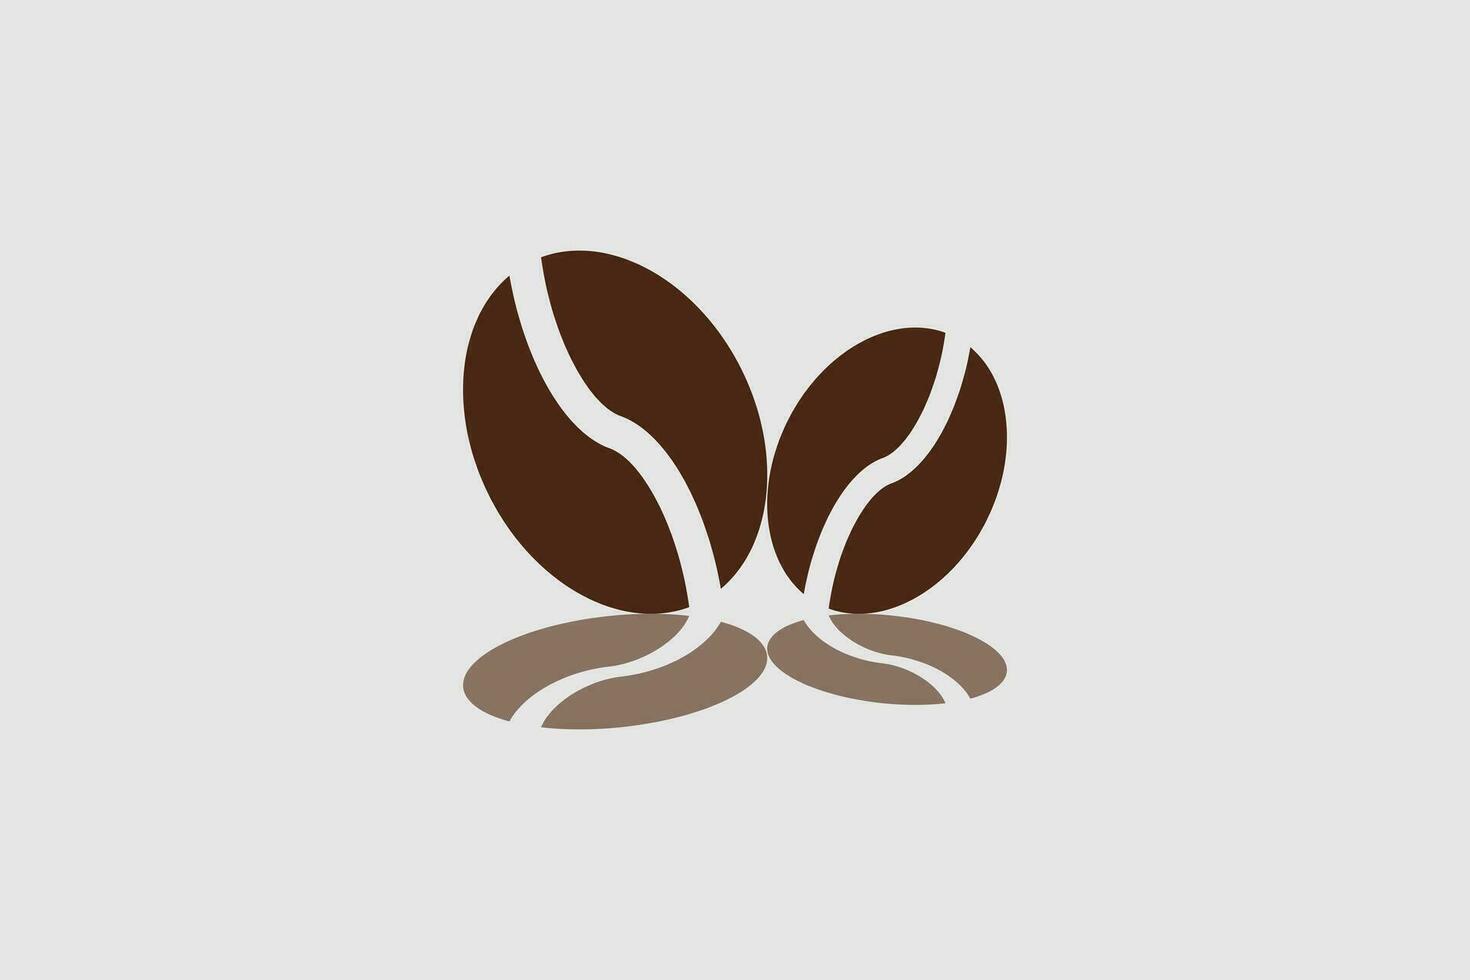 café logo conception vecteur illustraton